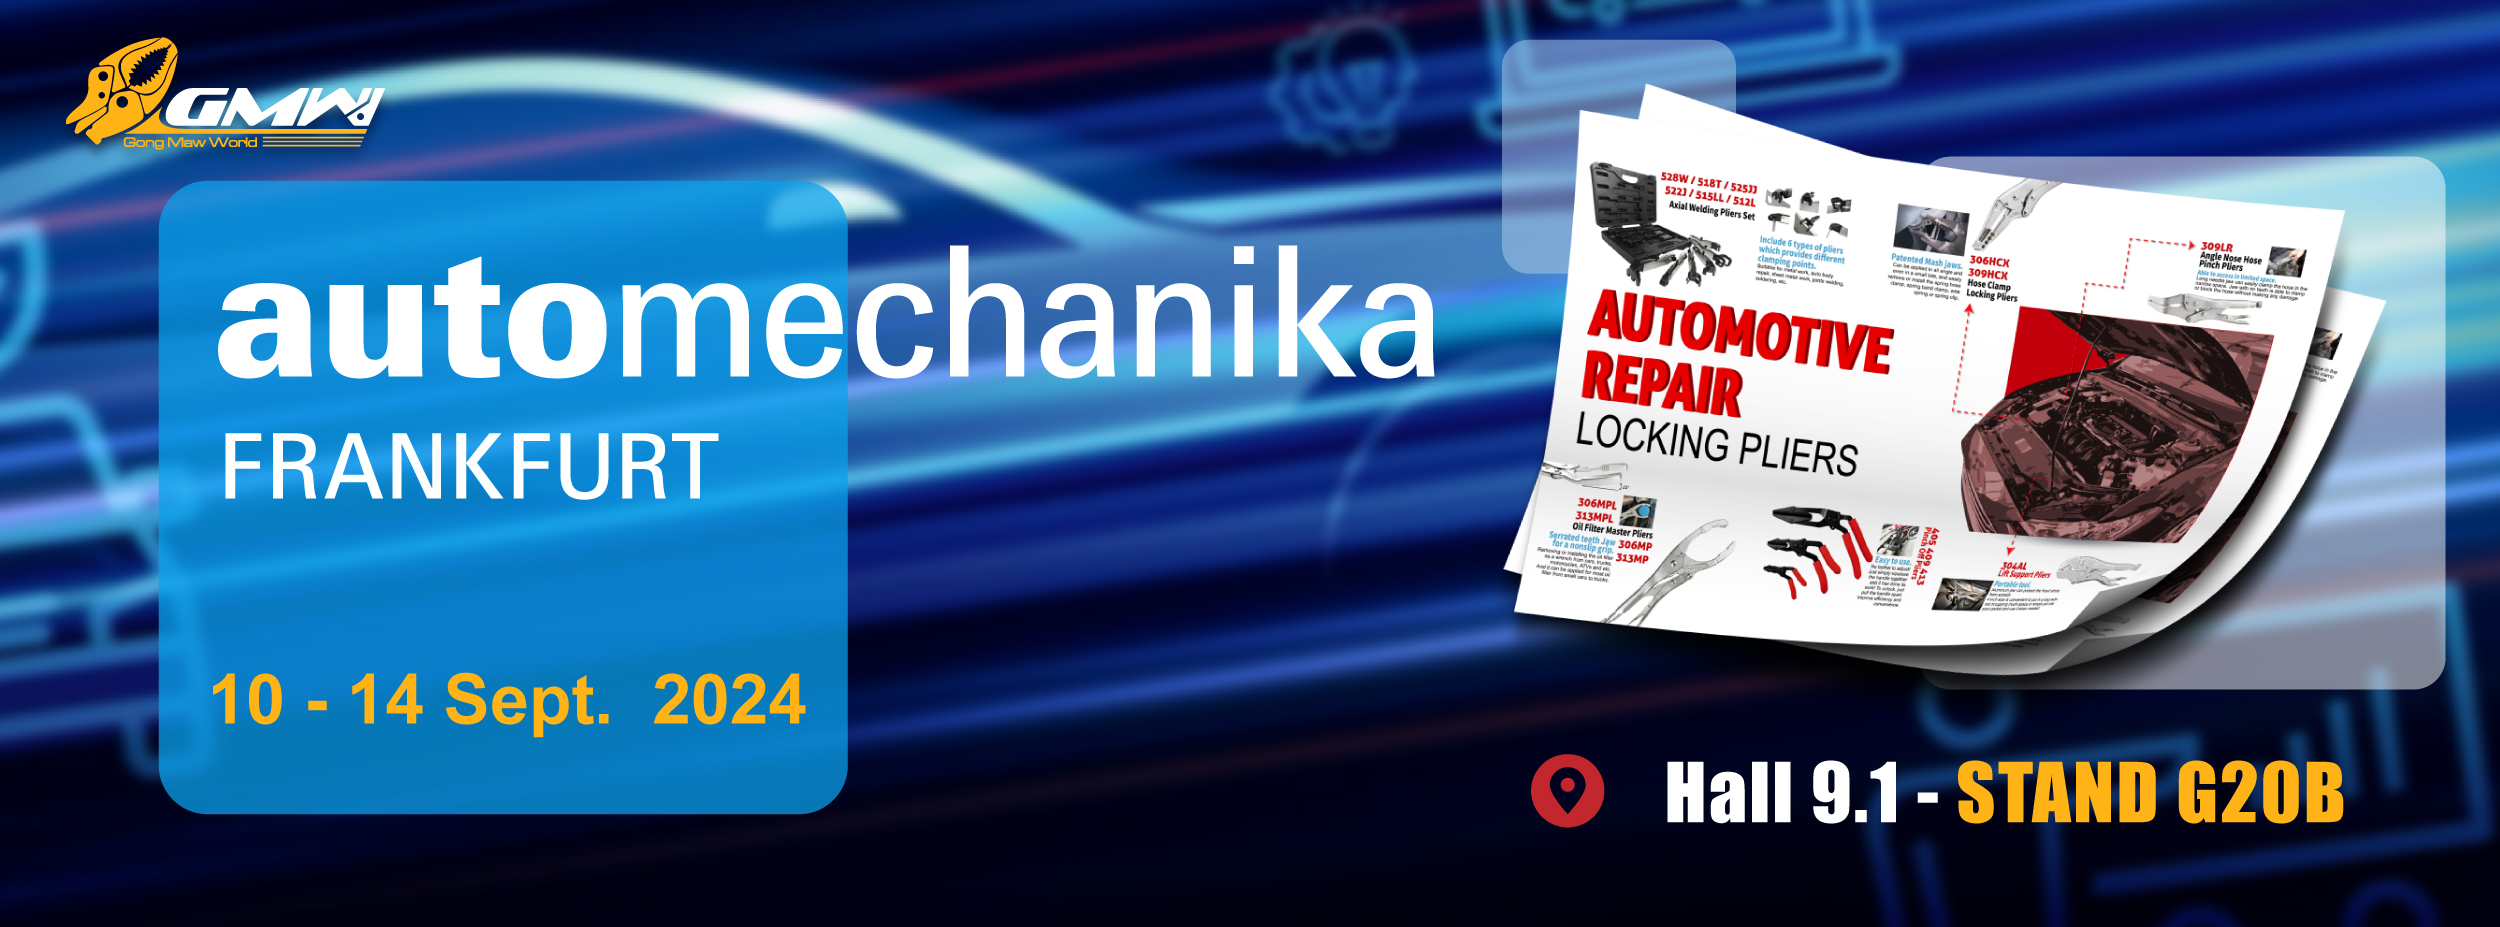 Join us at Automechanika Frankfurt 2024, 10-14 Sept.